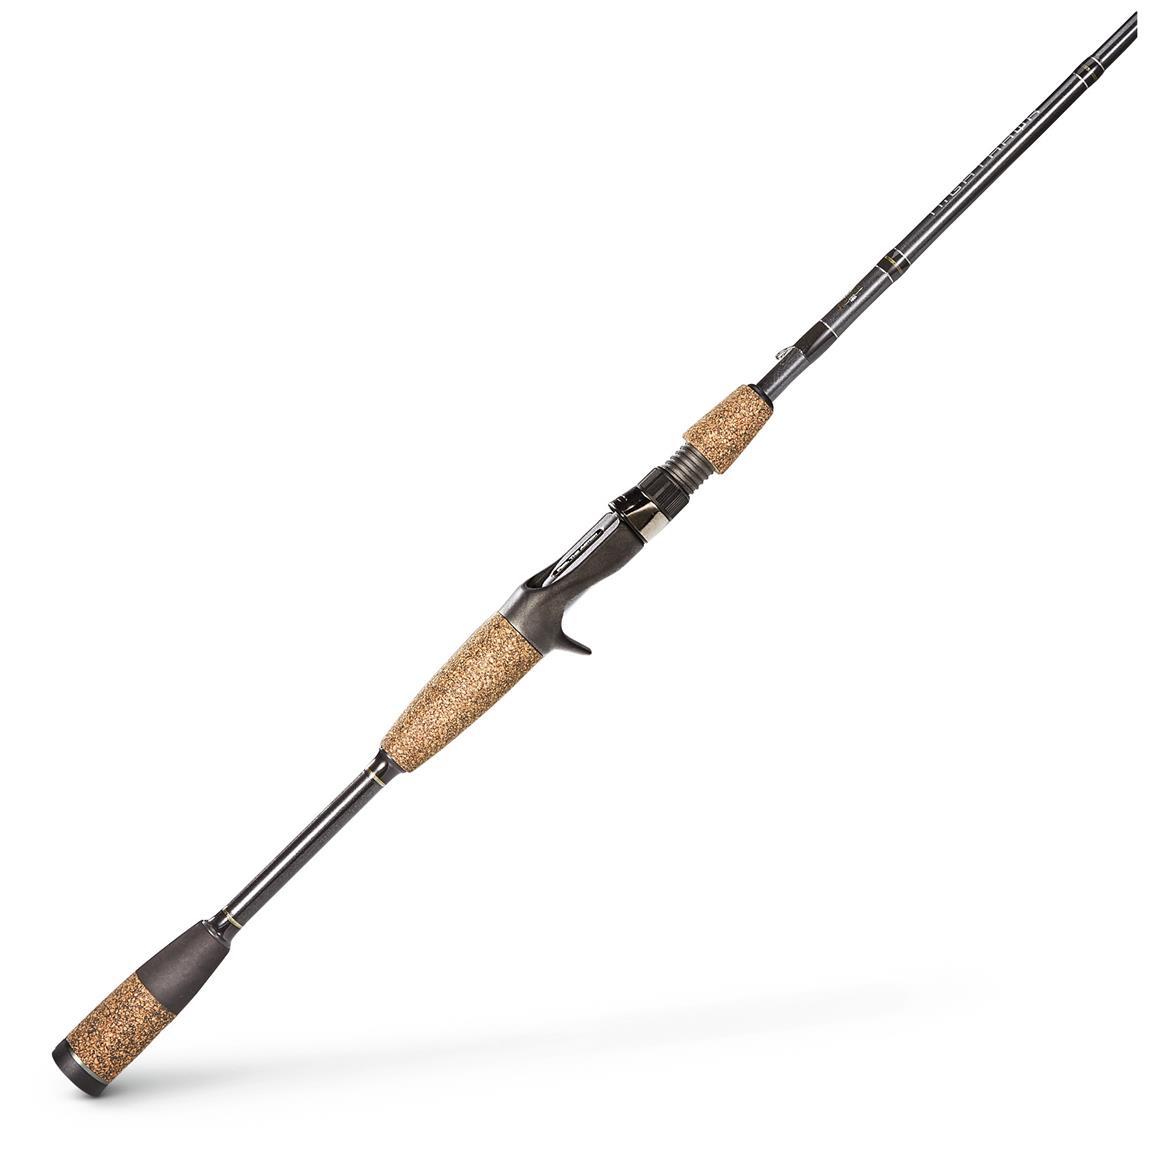 Fenwick Nighthawk Casting Rod, 6'6" - 656054, Casting Rods at Sportsman